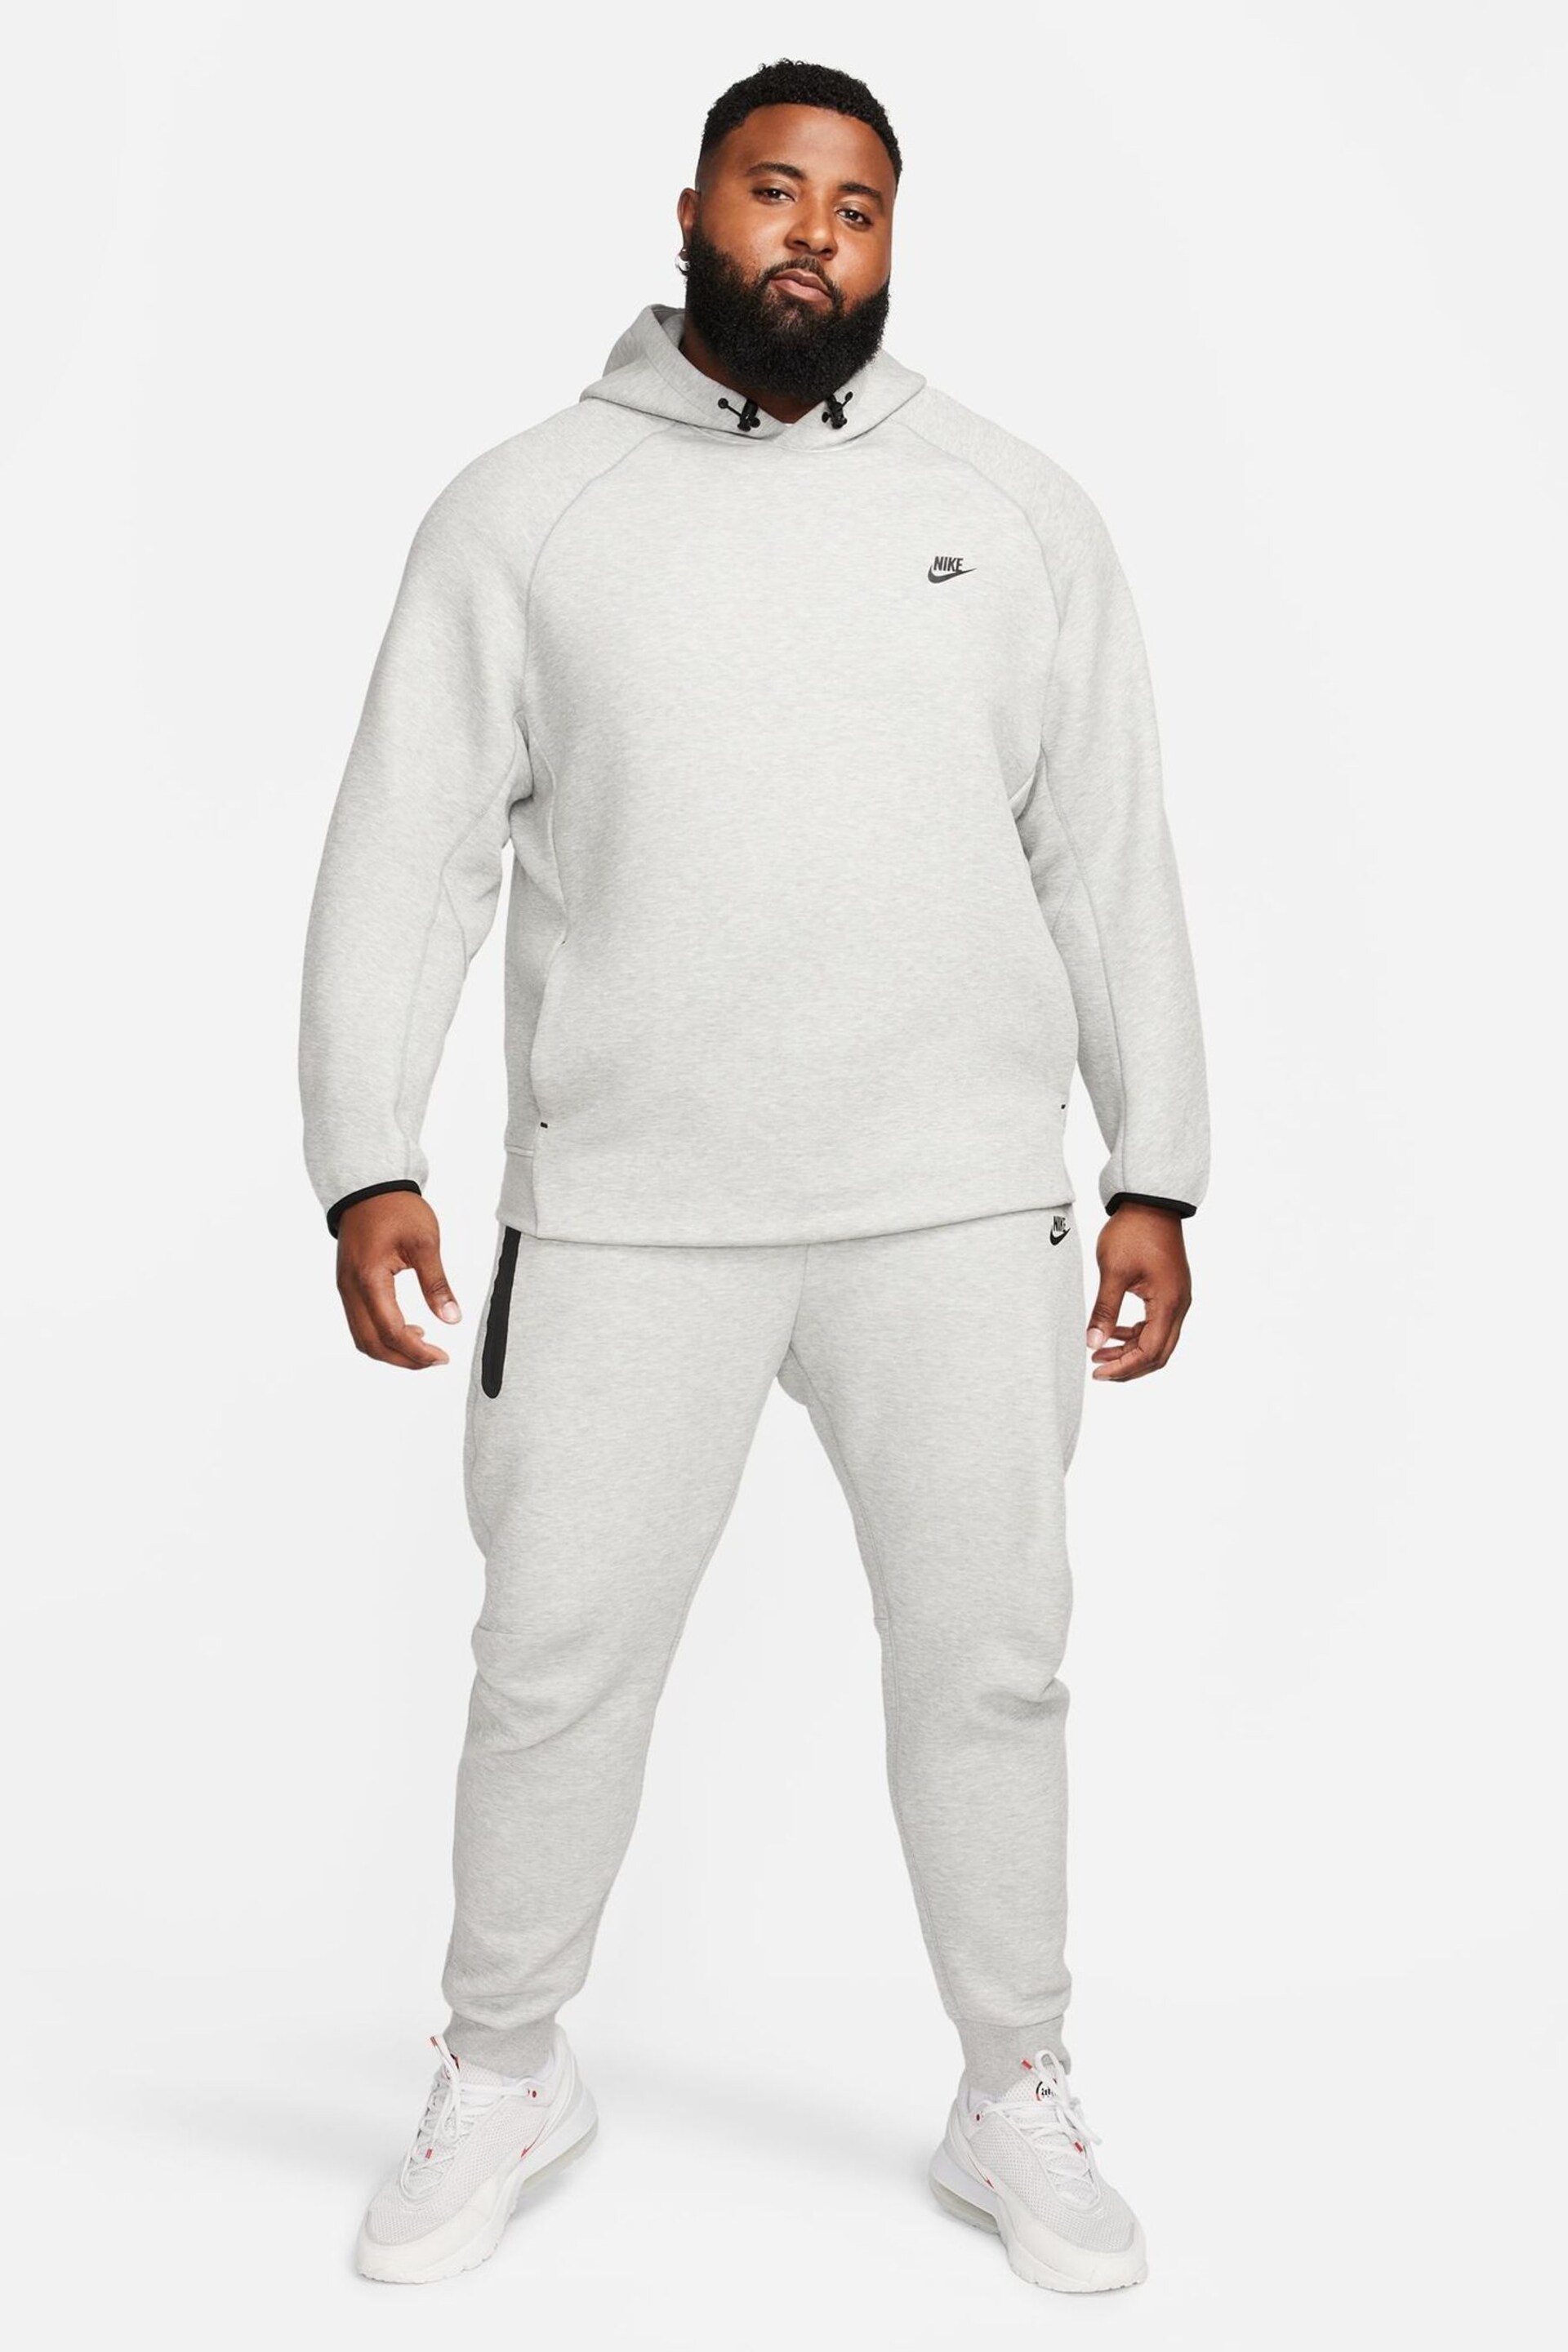 Nike Grey Tech Fleece Pullover Hoodie - Image 10 of 18